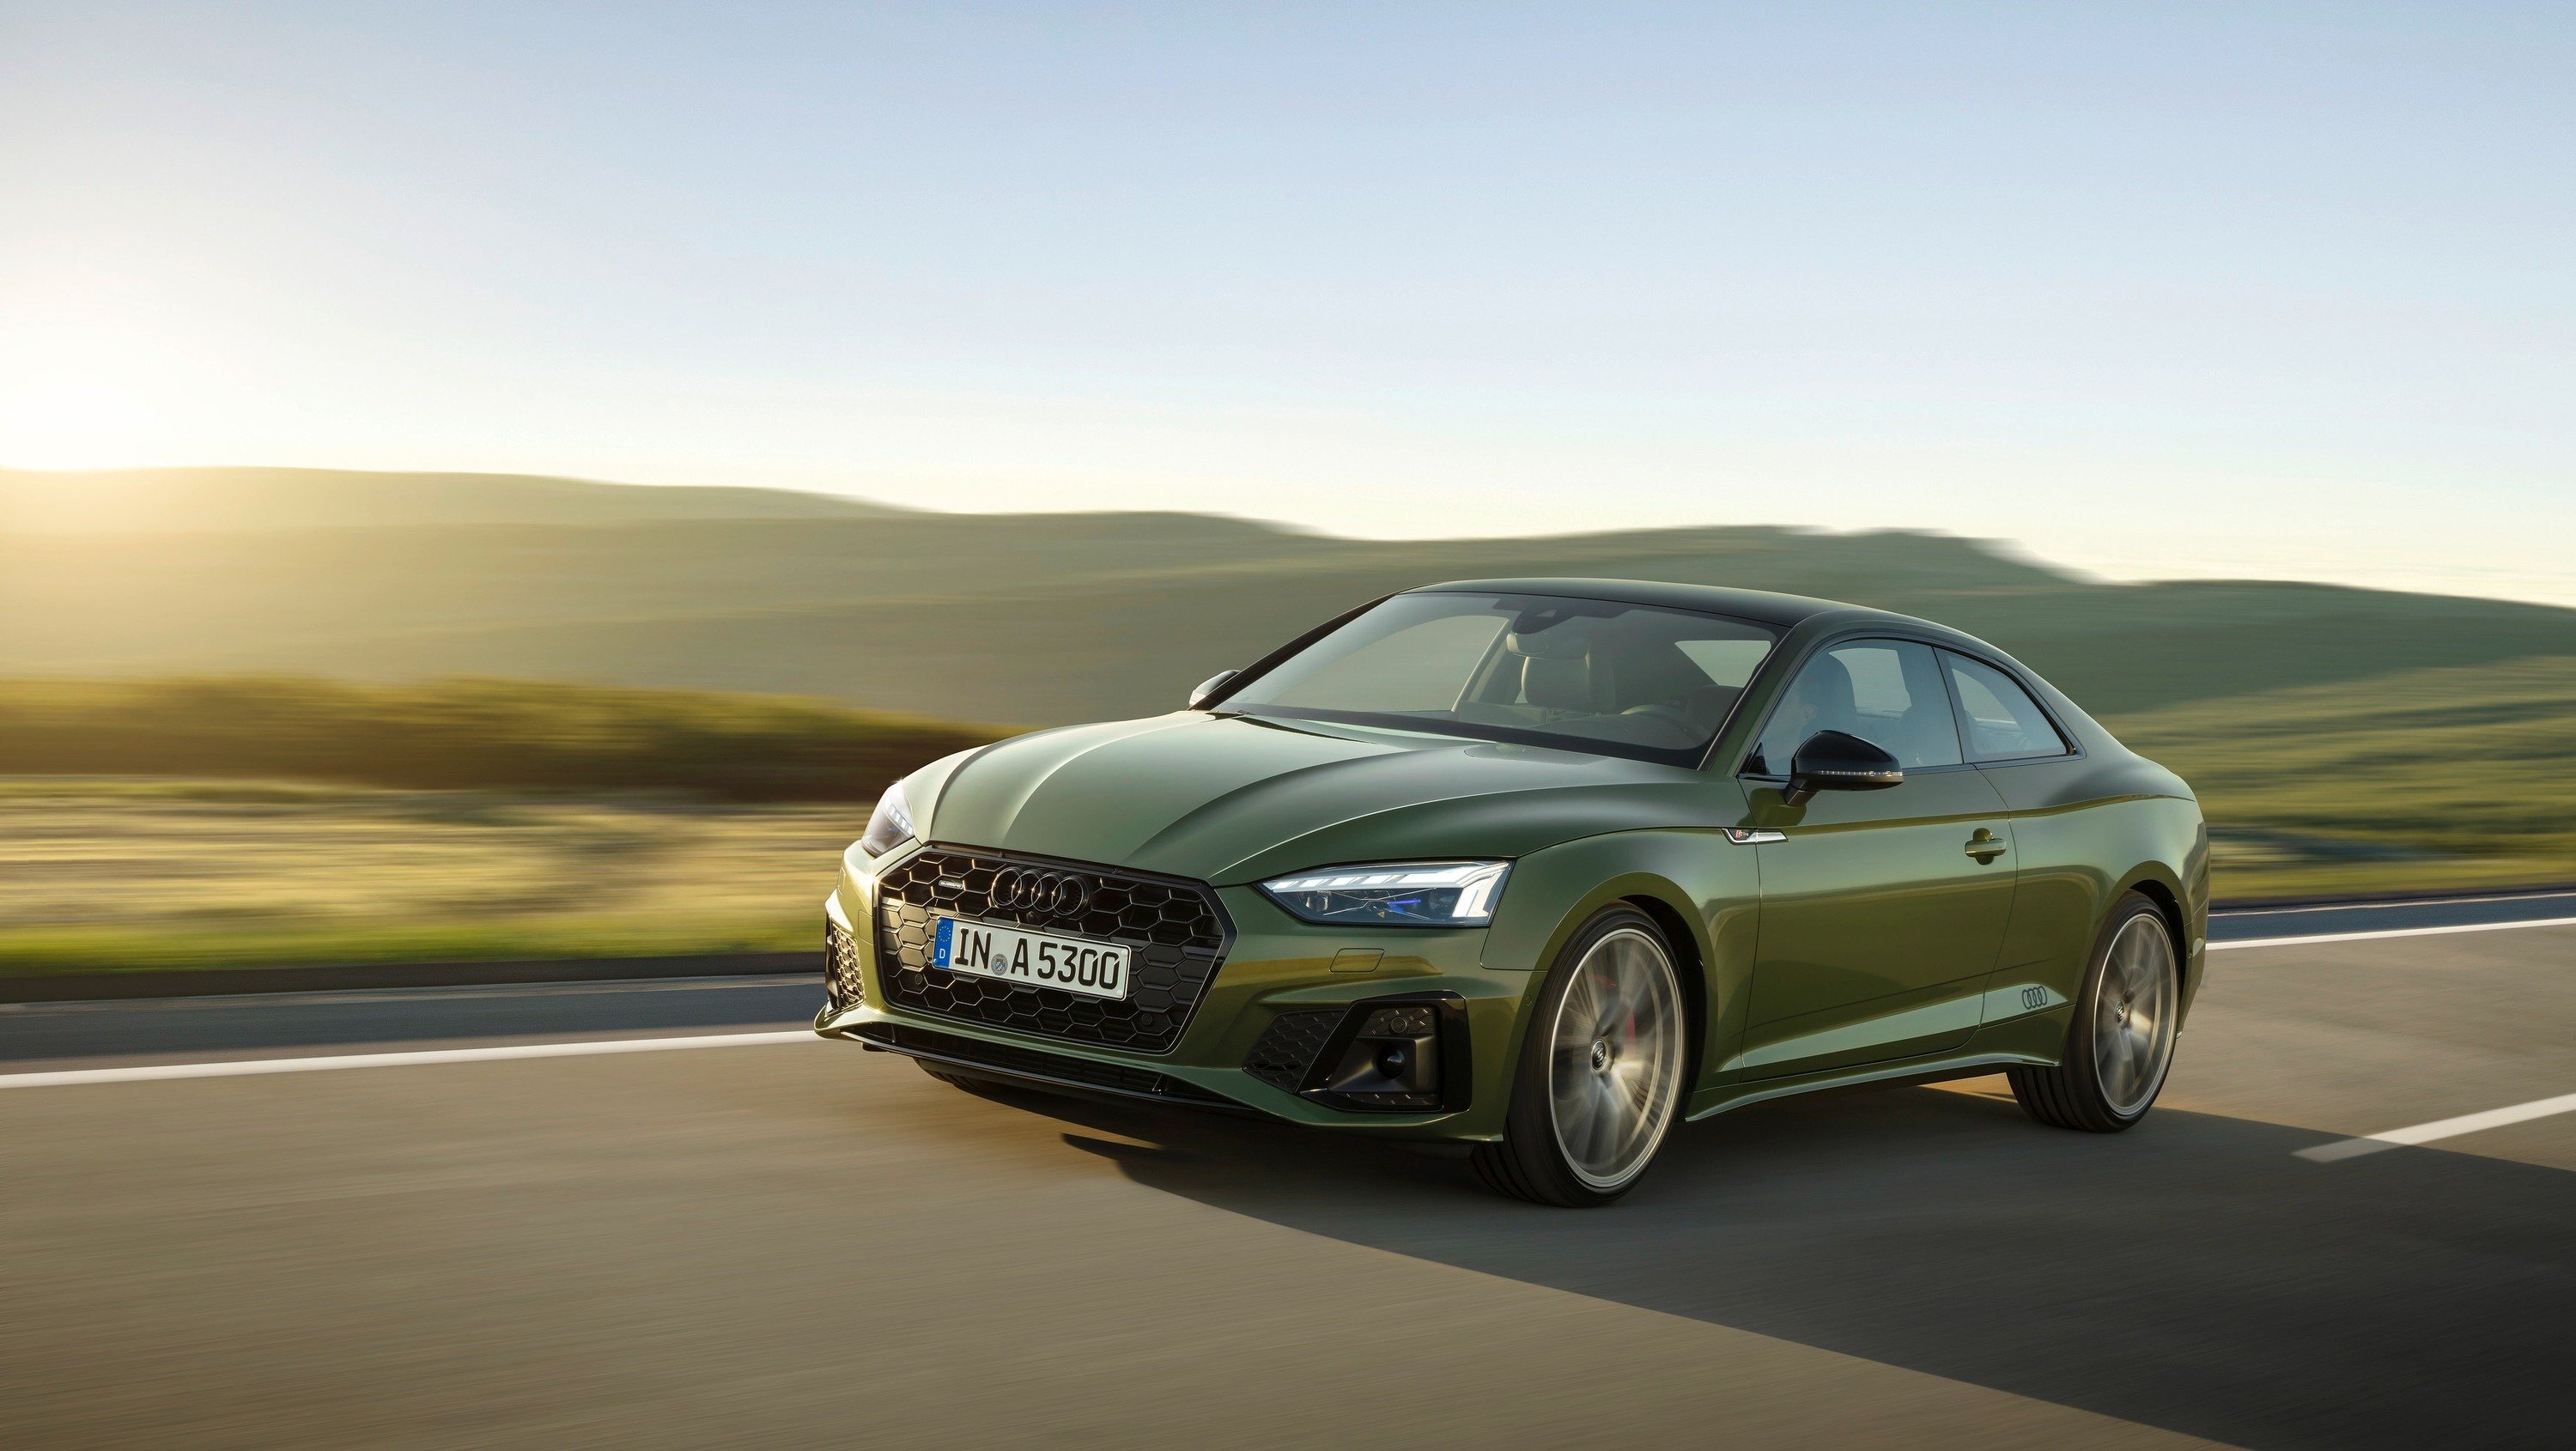 Audi A5 2020: restyling e motori mild hybrid [Foto]